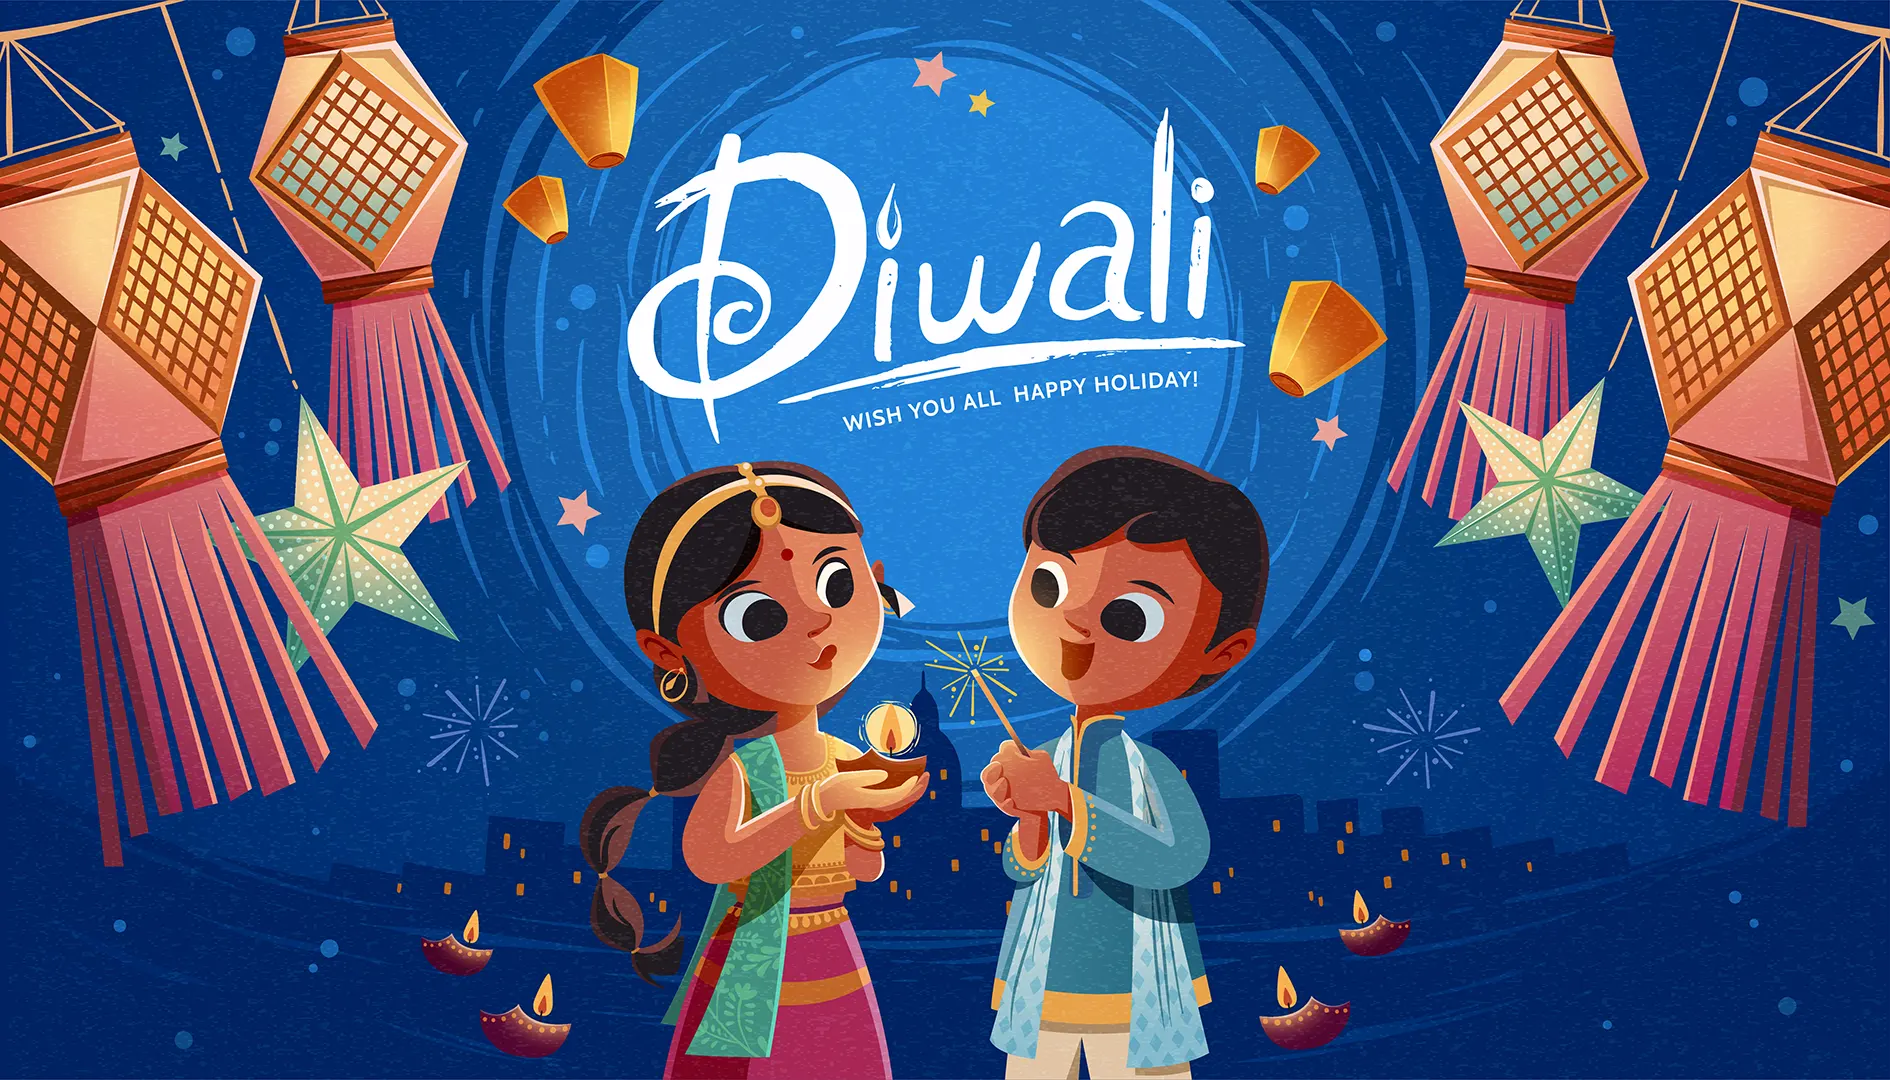 diwali-children-holding-oil-lamp-sparkler-with-hanging-indian-lanterns-sky-lanterns